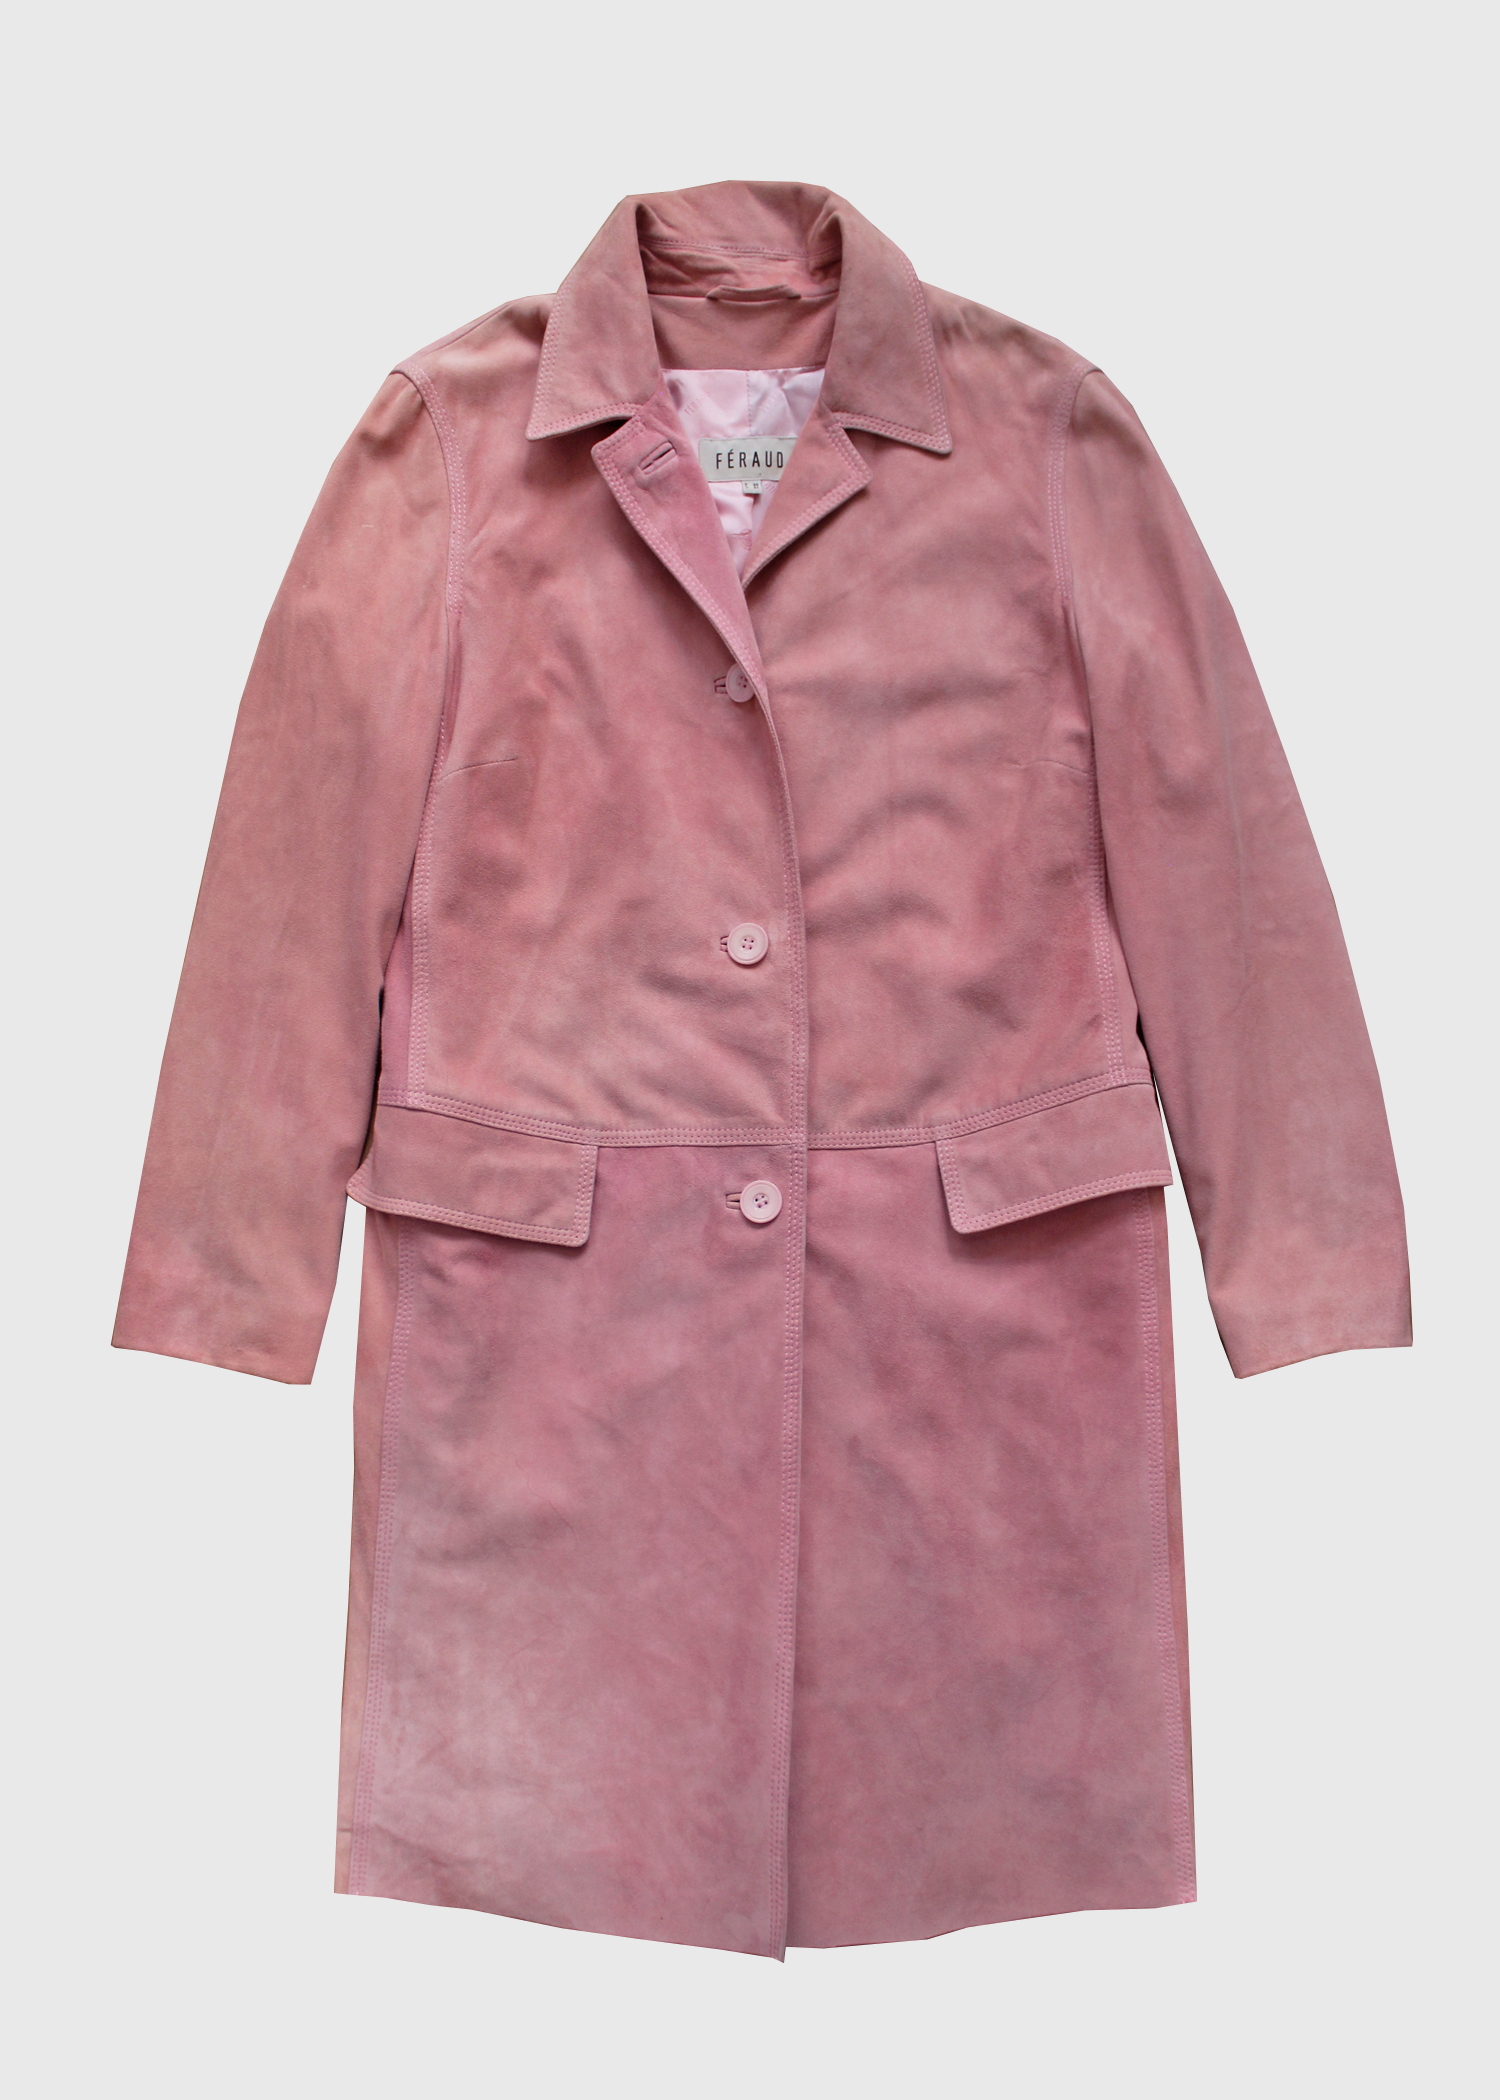 Vintage & second hand Louis Feraud coats